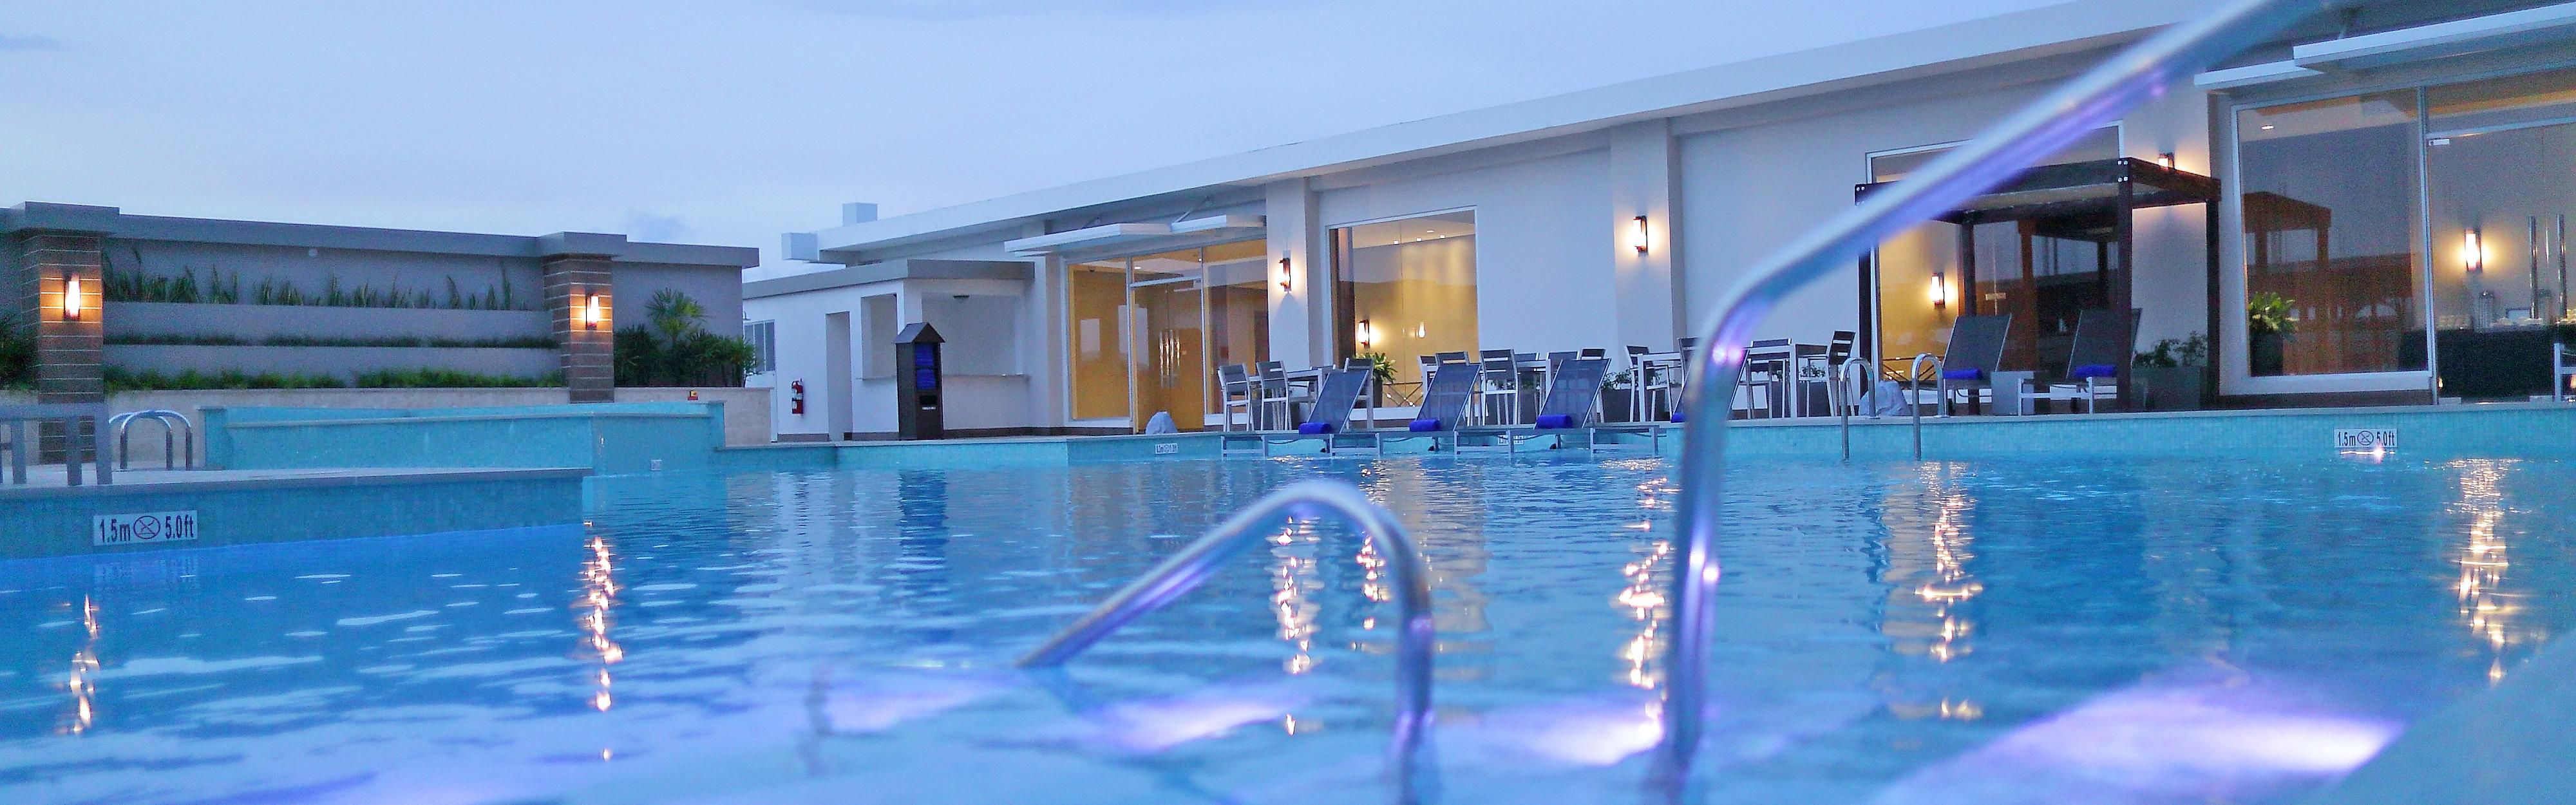 Swimming Pool at the Crowne Plaza Hotel Panama